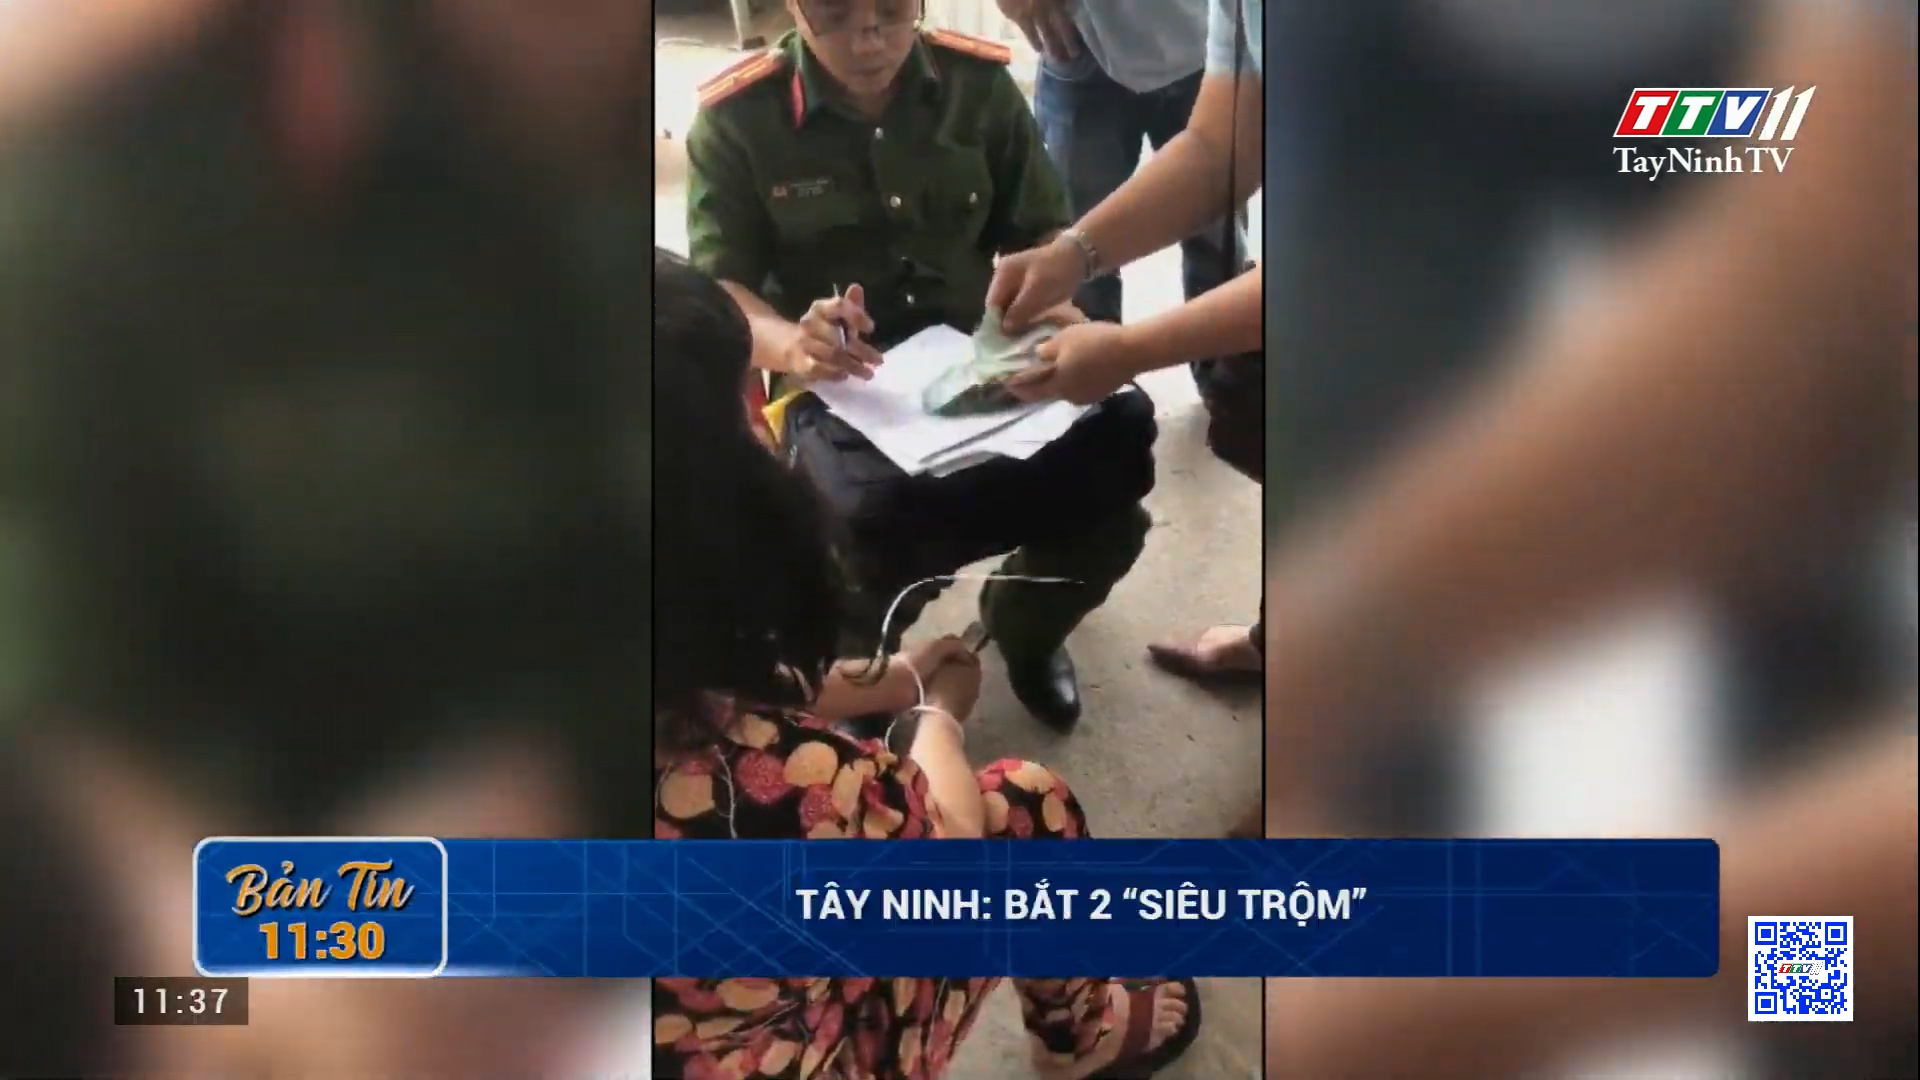 Tây Ninh: Bắt 2 “siêu trộm” | TayNinhTV